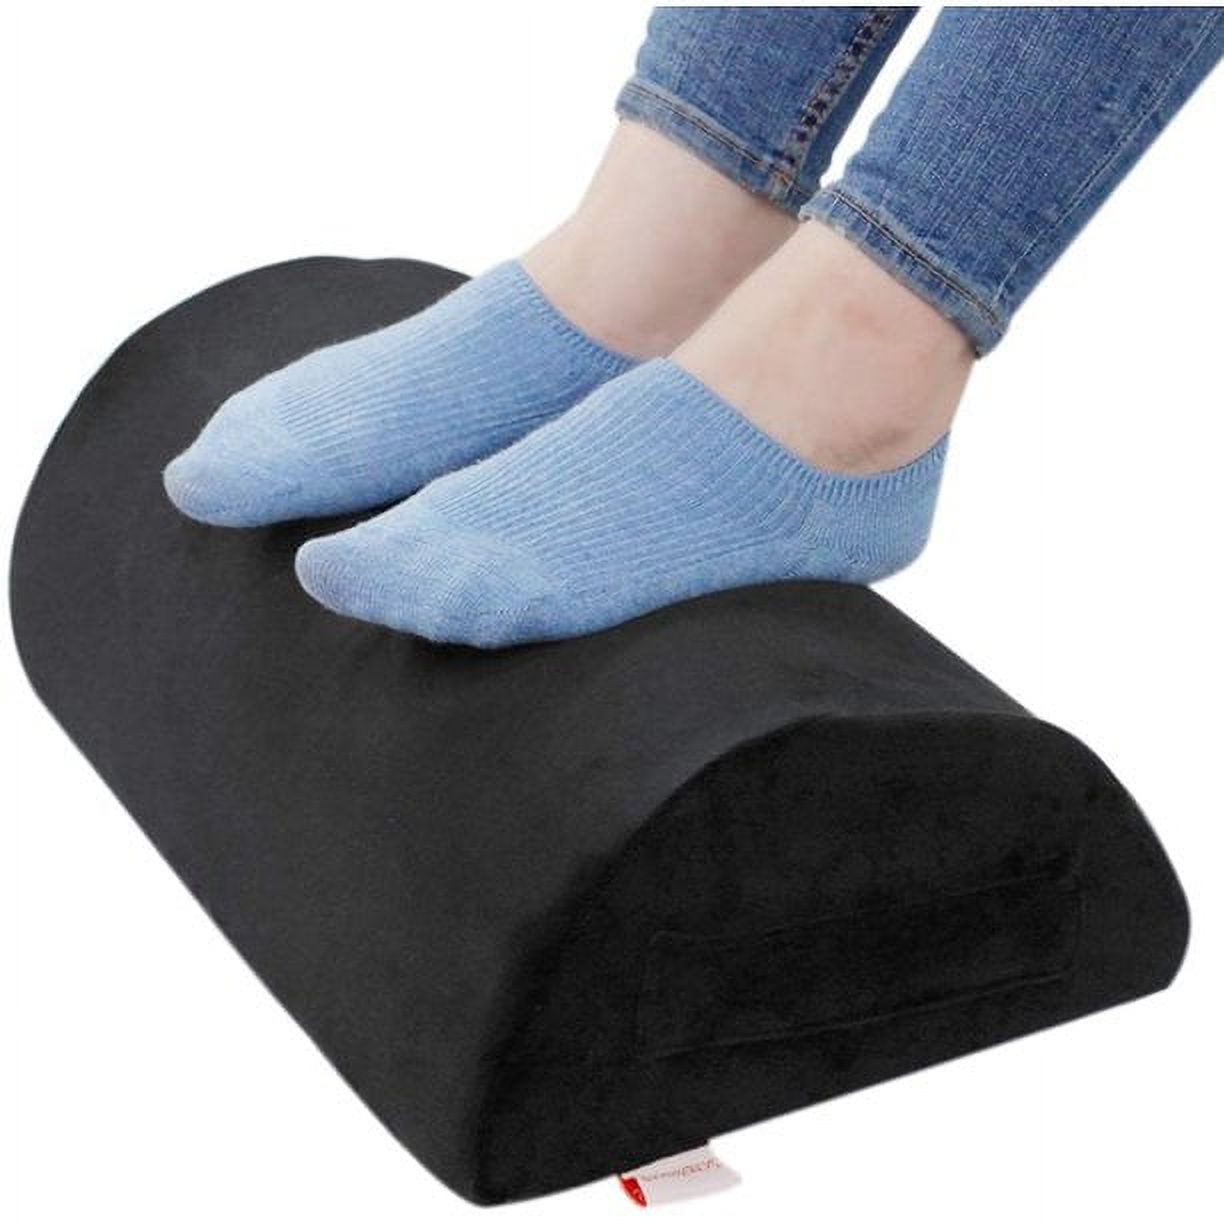 Ergonomic Foot Rest Cushion Under Desk with High Rebound Ergonomic Foam Non-Slip Half-Cylinder Footstool Footrest Ottoman for Home Office Desk Airplane Travel (Black) - image 1 of 8